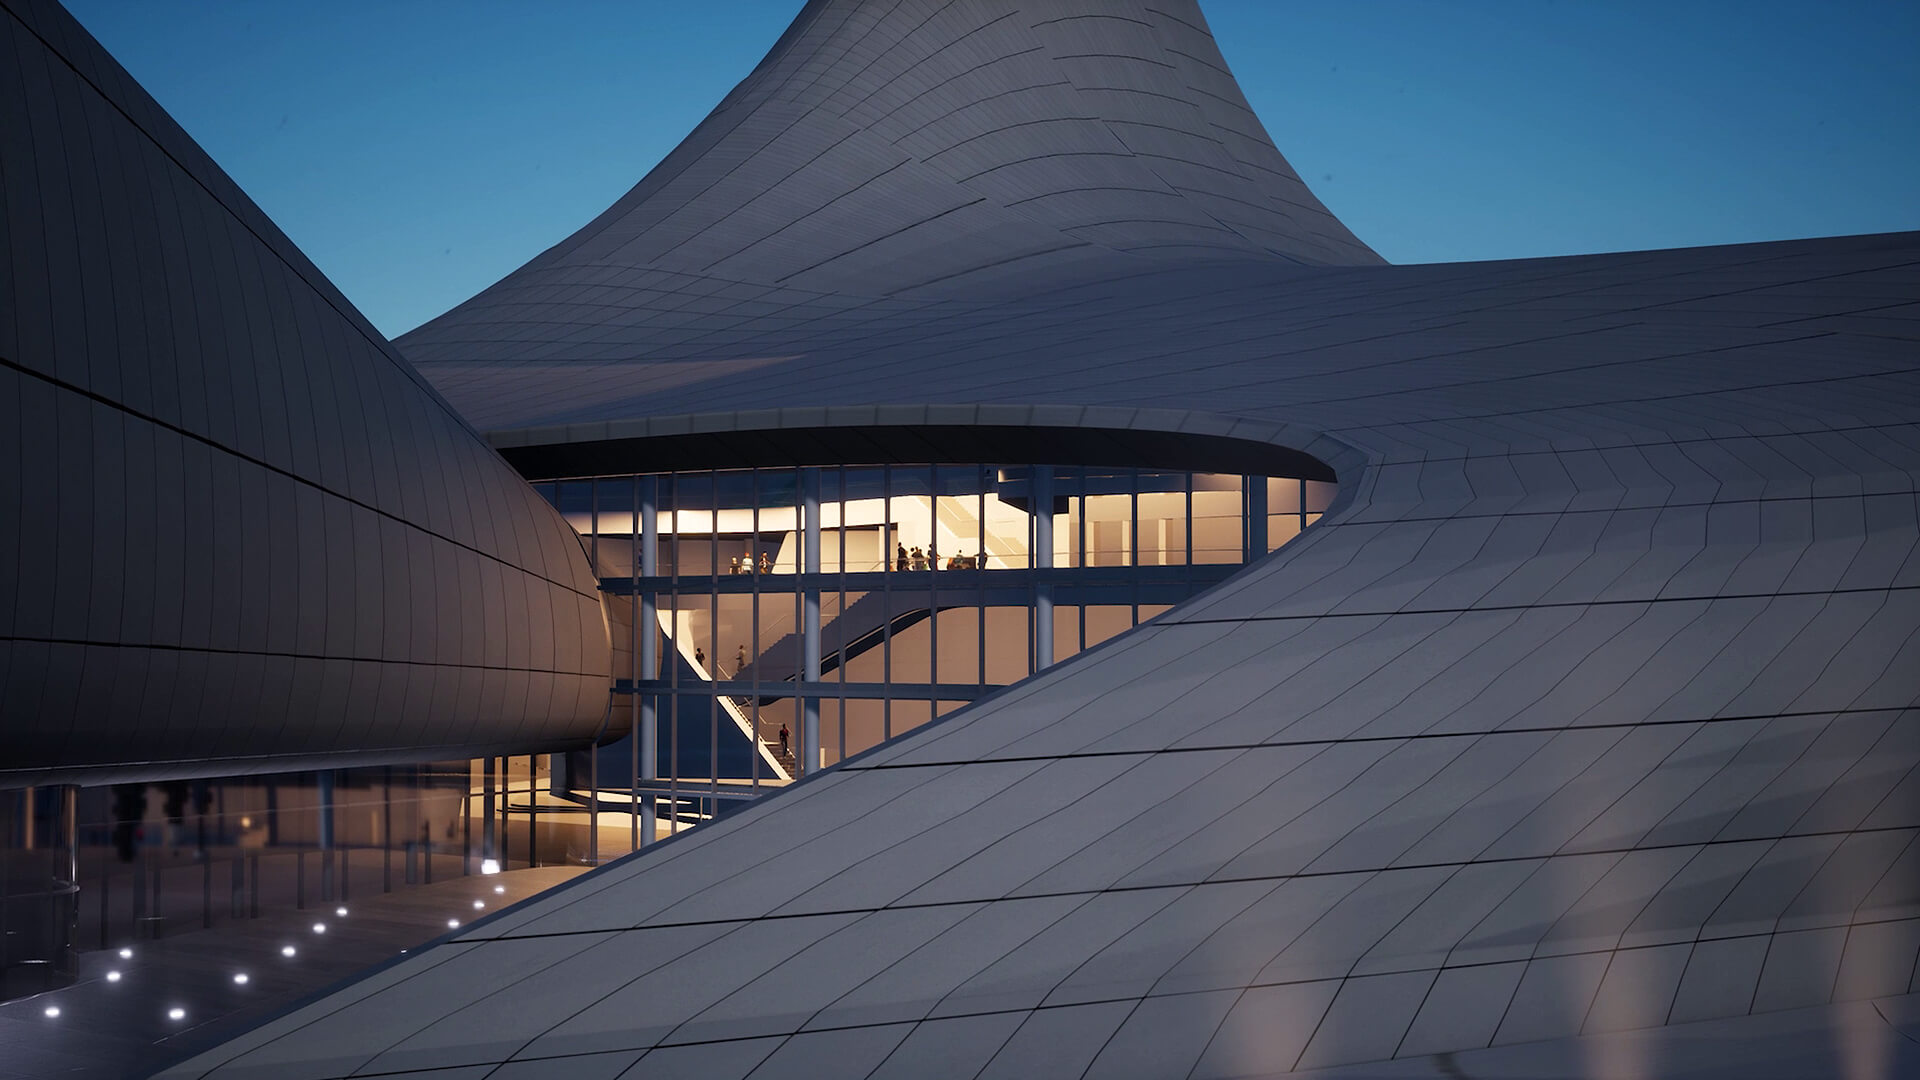 Zaha Hadid Architects turns to Twinmotion